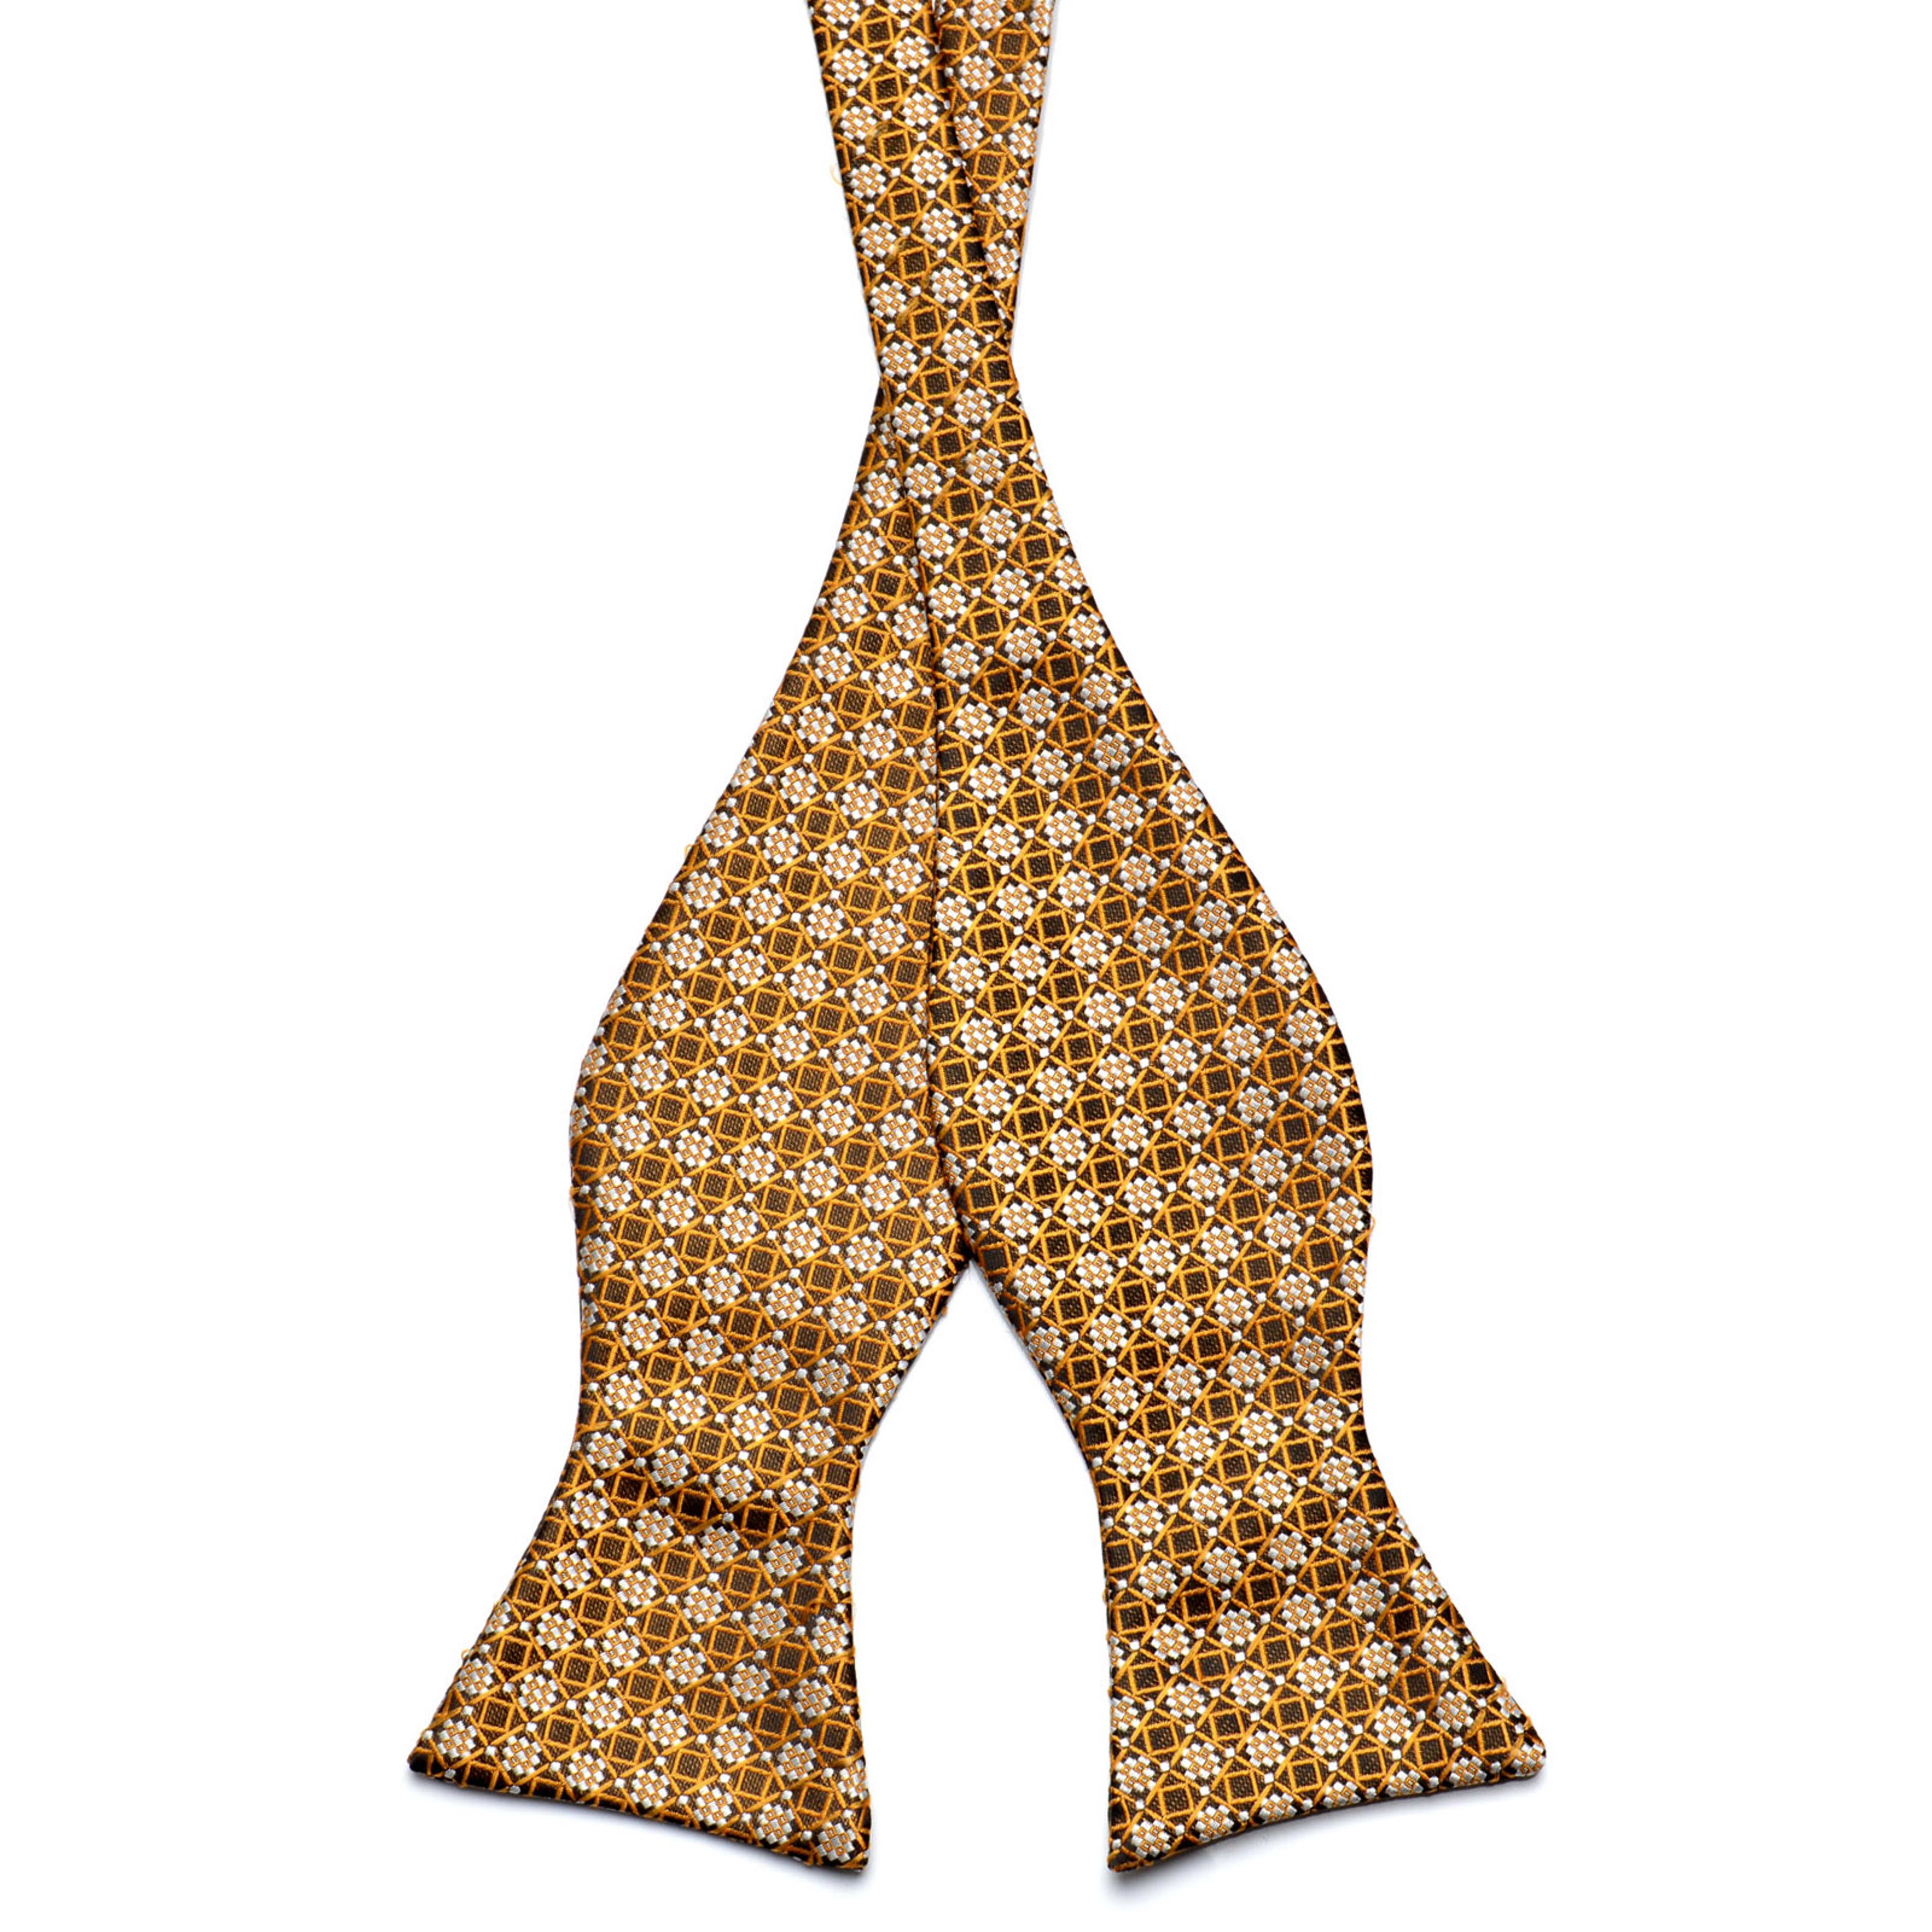 Brown & Yellow Retro Self-Tie Bow Tie